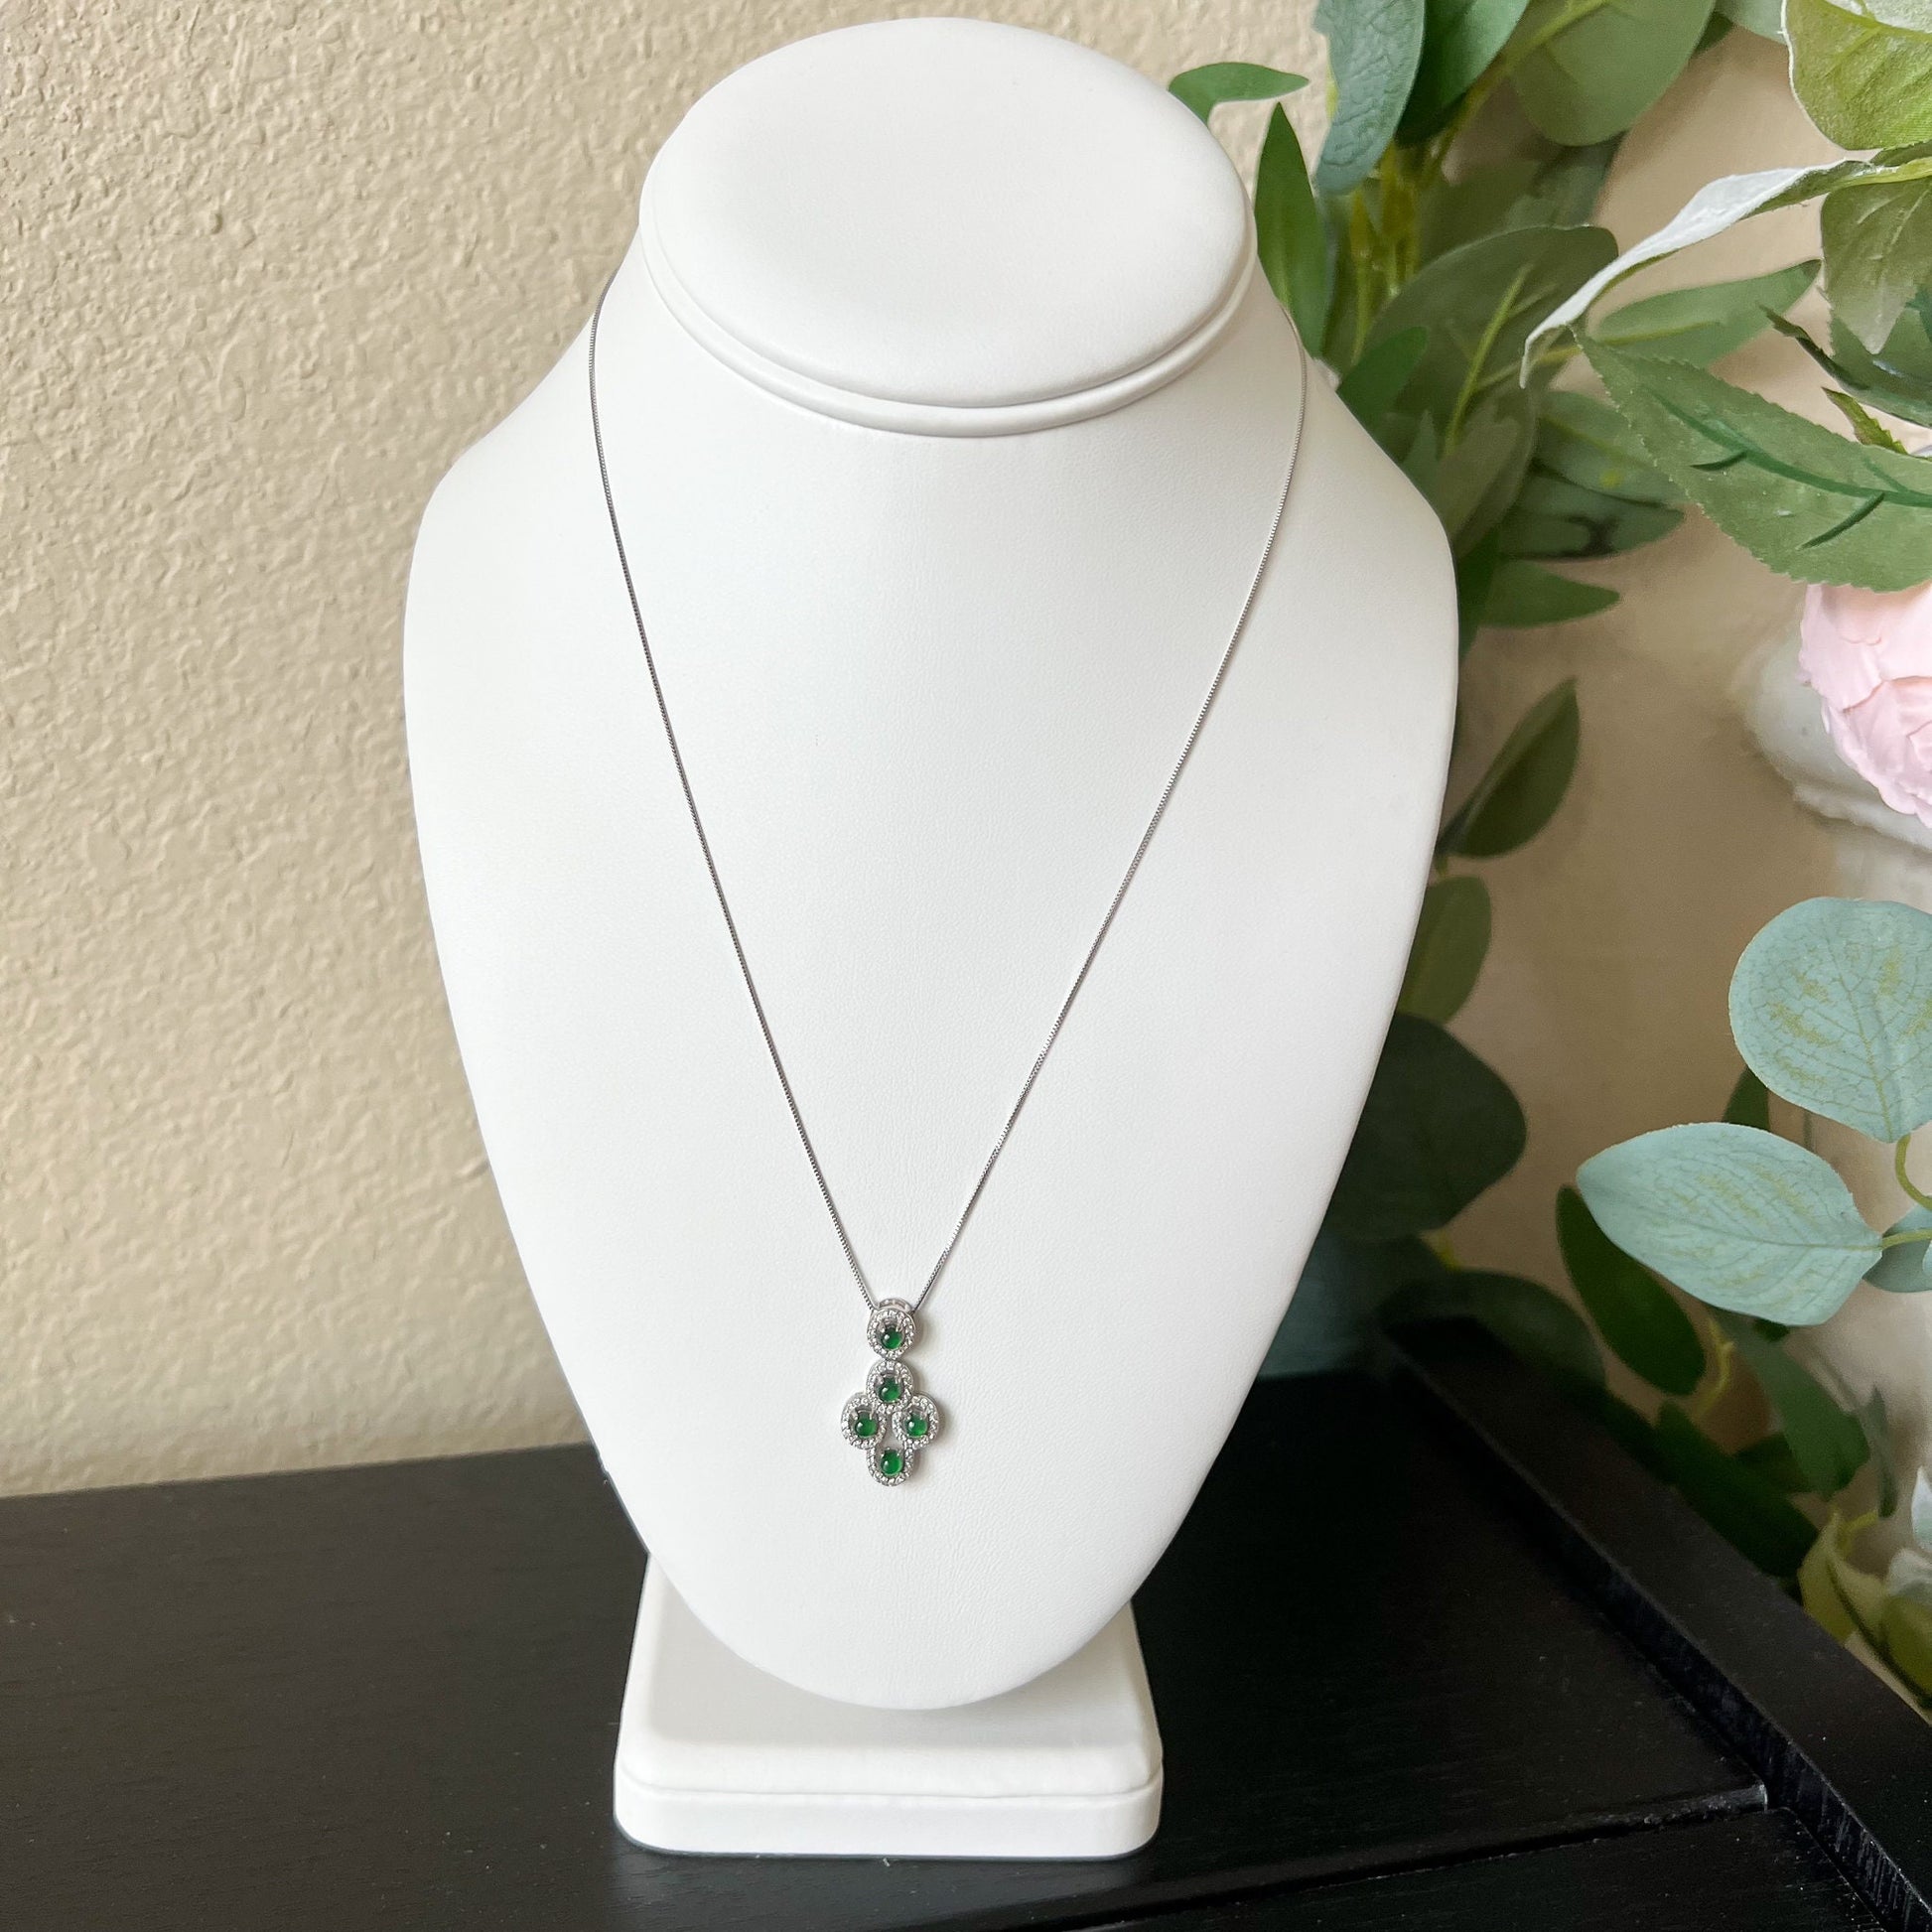 Green Jade Pendant, Jadeite Jade, Small Dainty, Sterling Silver Pendant Necklace, FDD4-1221-0021769 - AriaDesignCollection